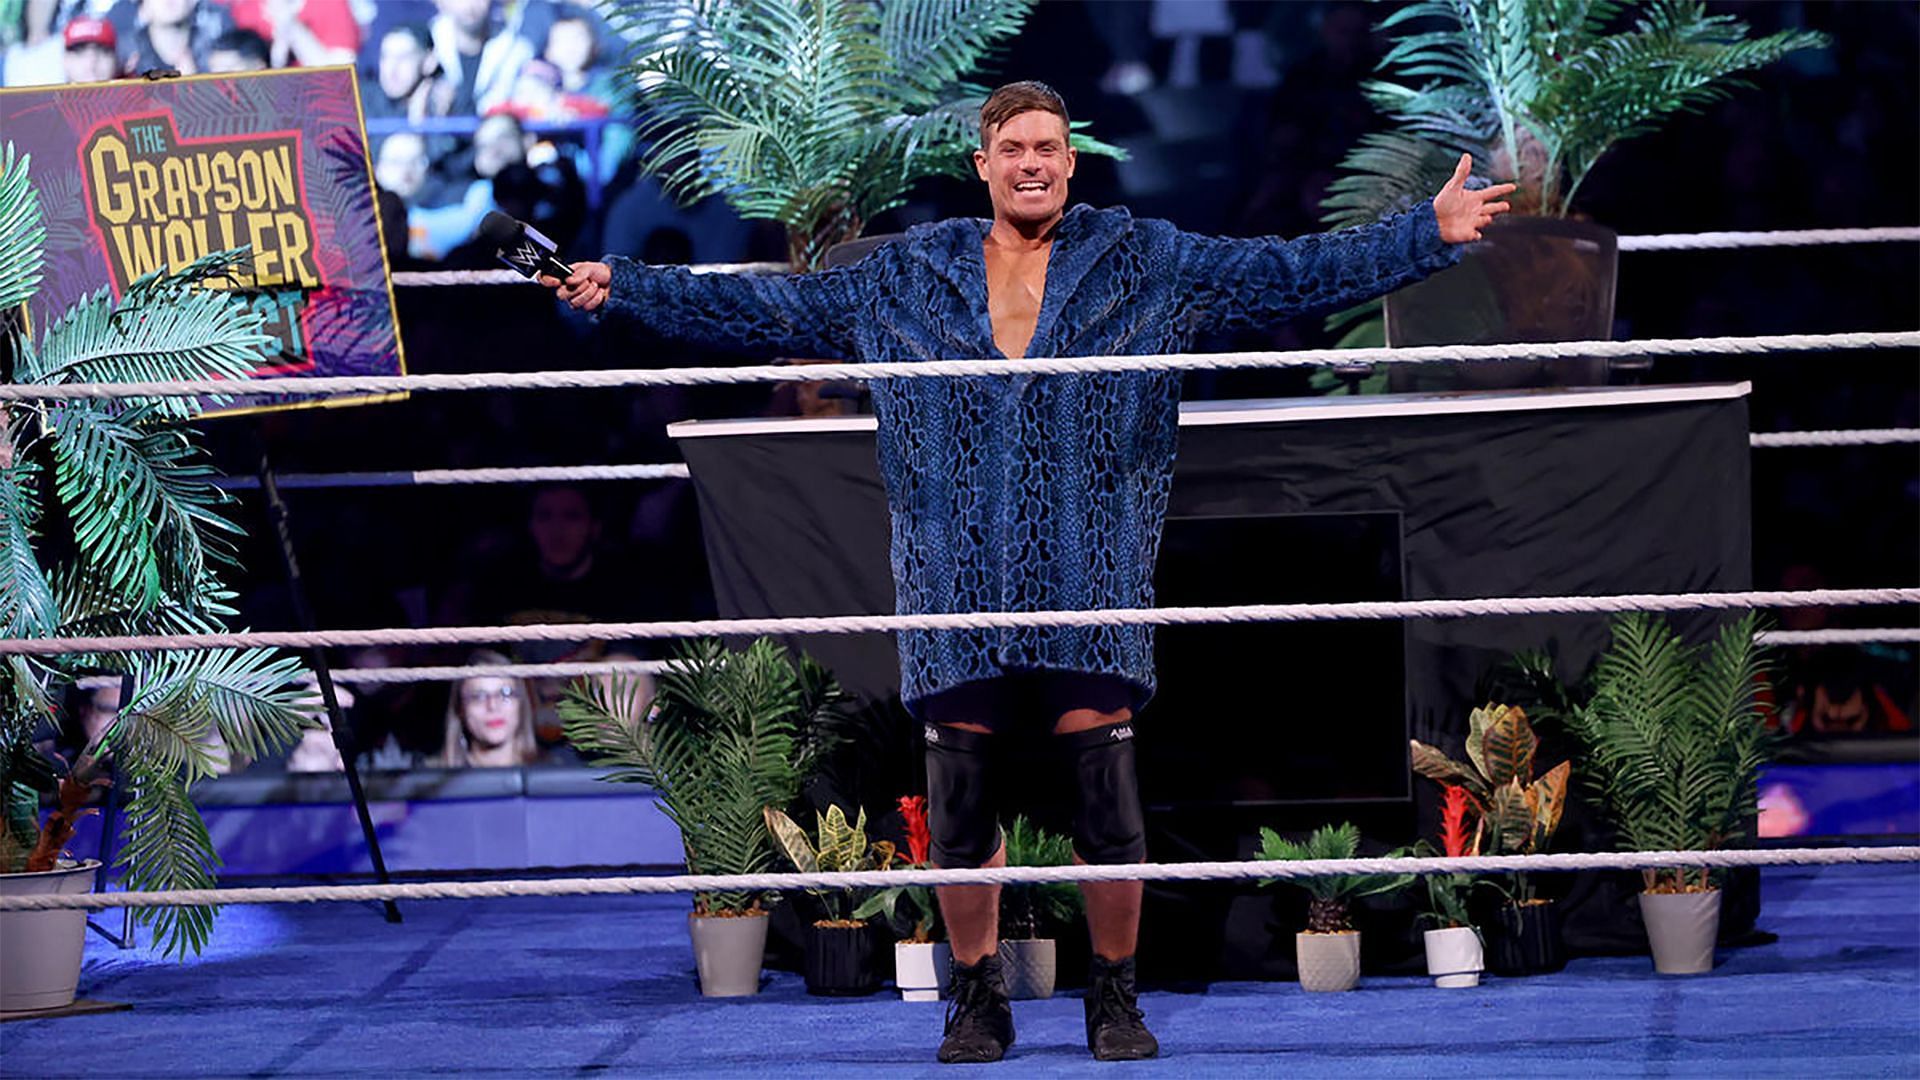 Grayson Waller hosts his segment on WWE SmackDown